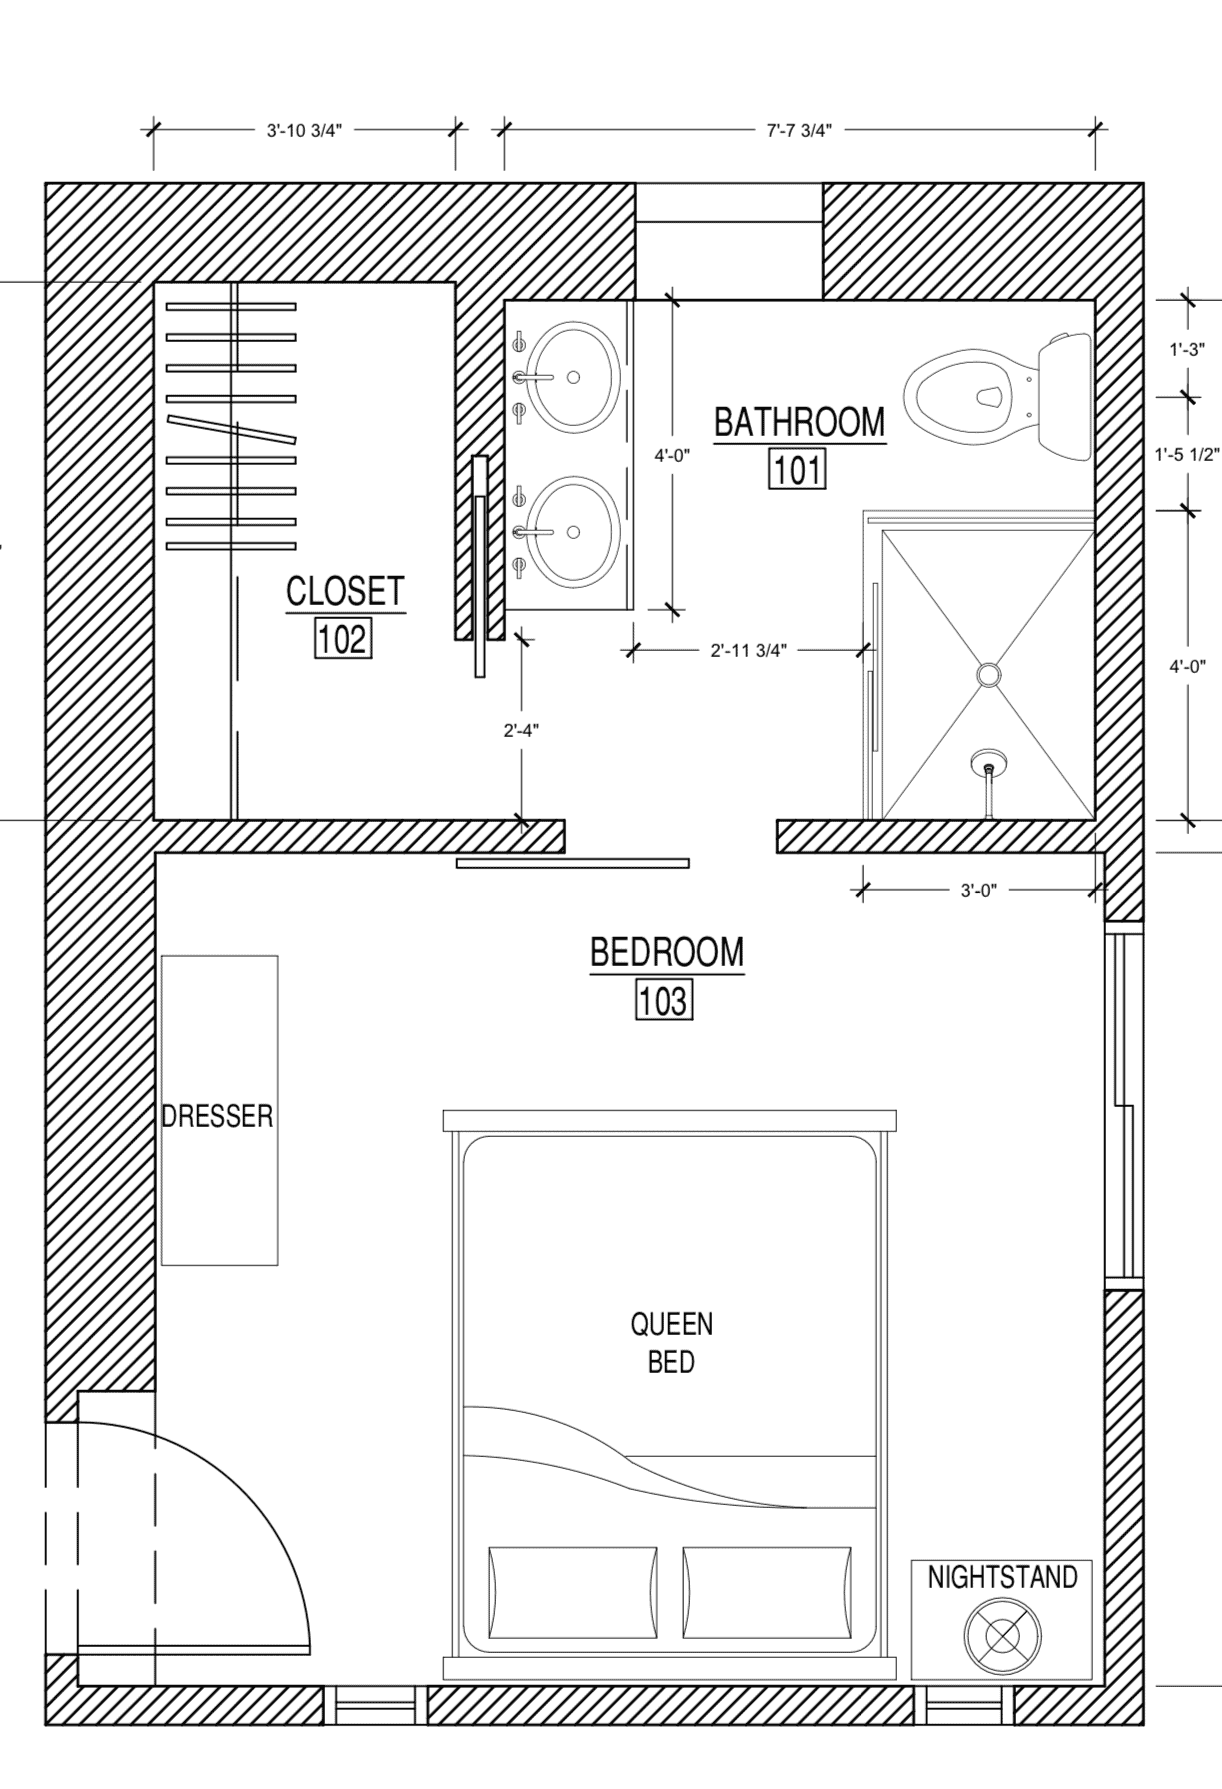 My first renovation floor plan